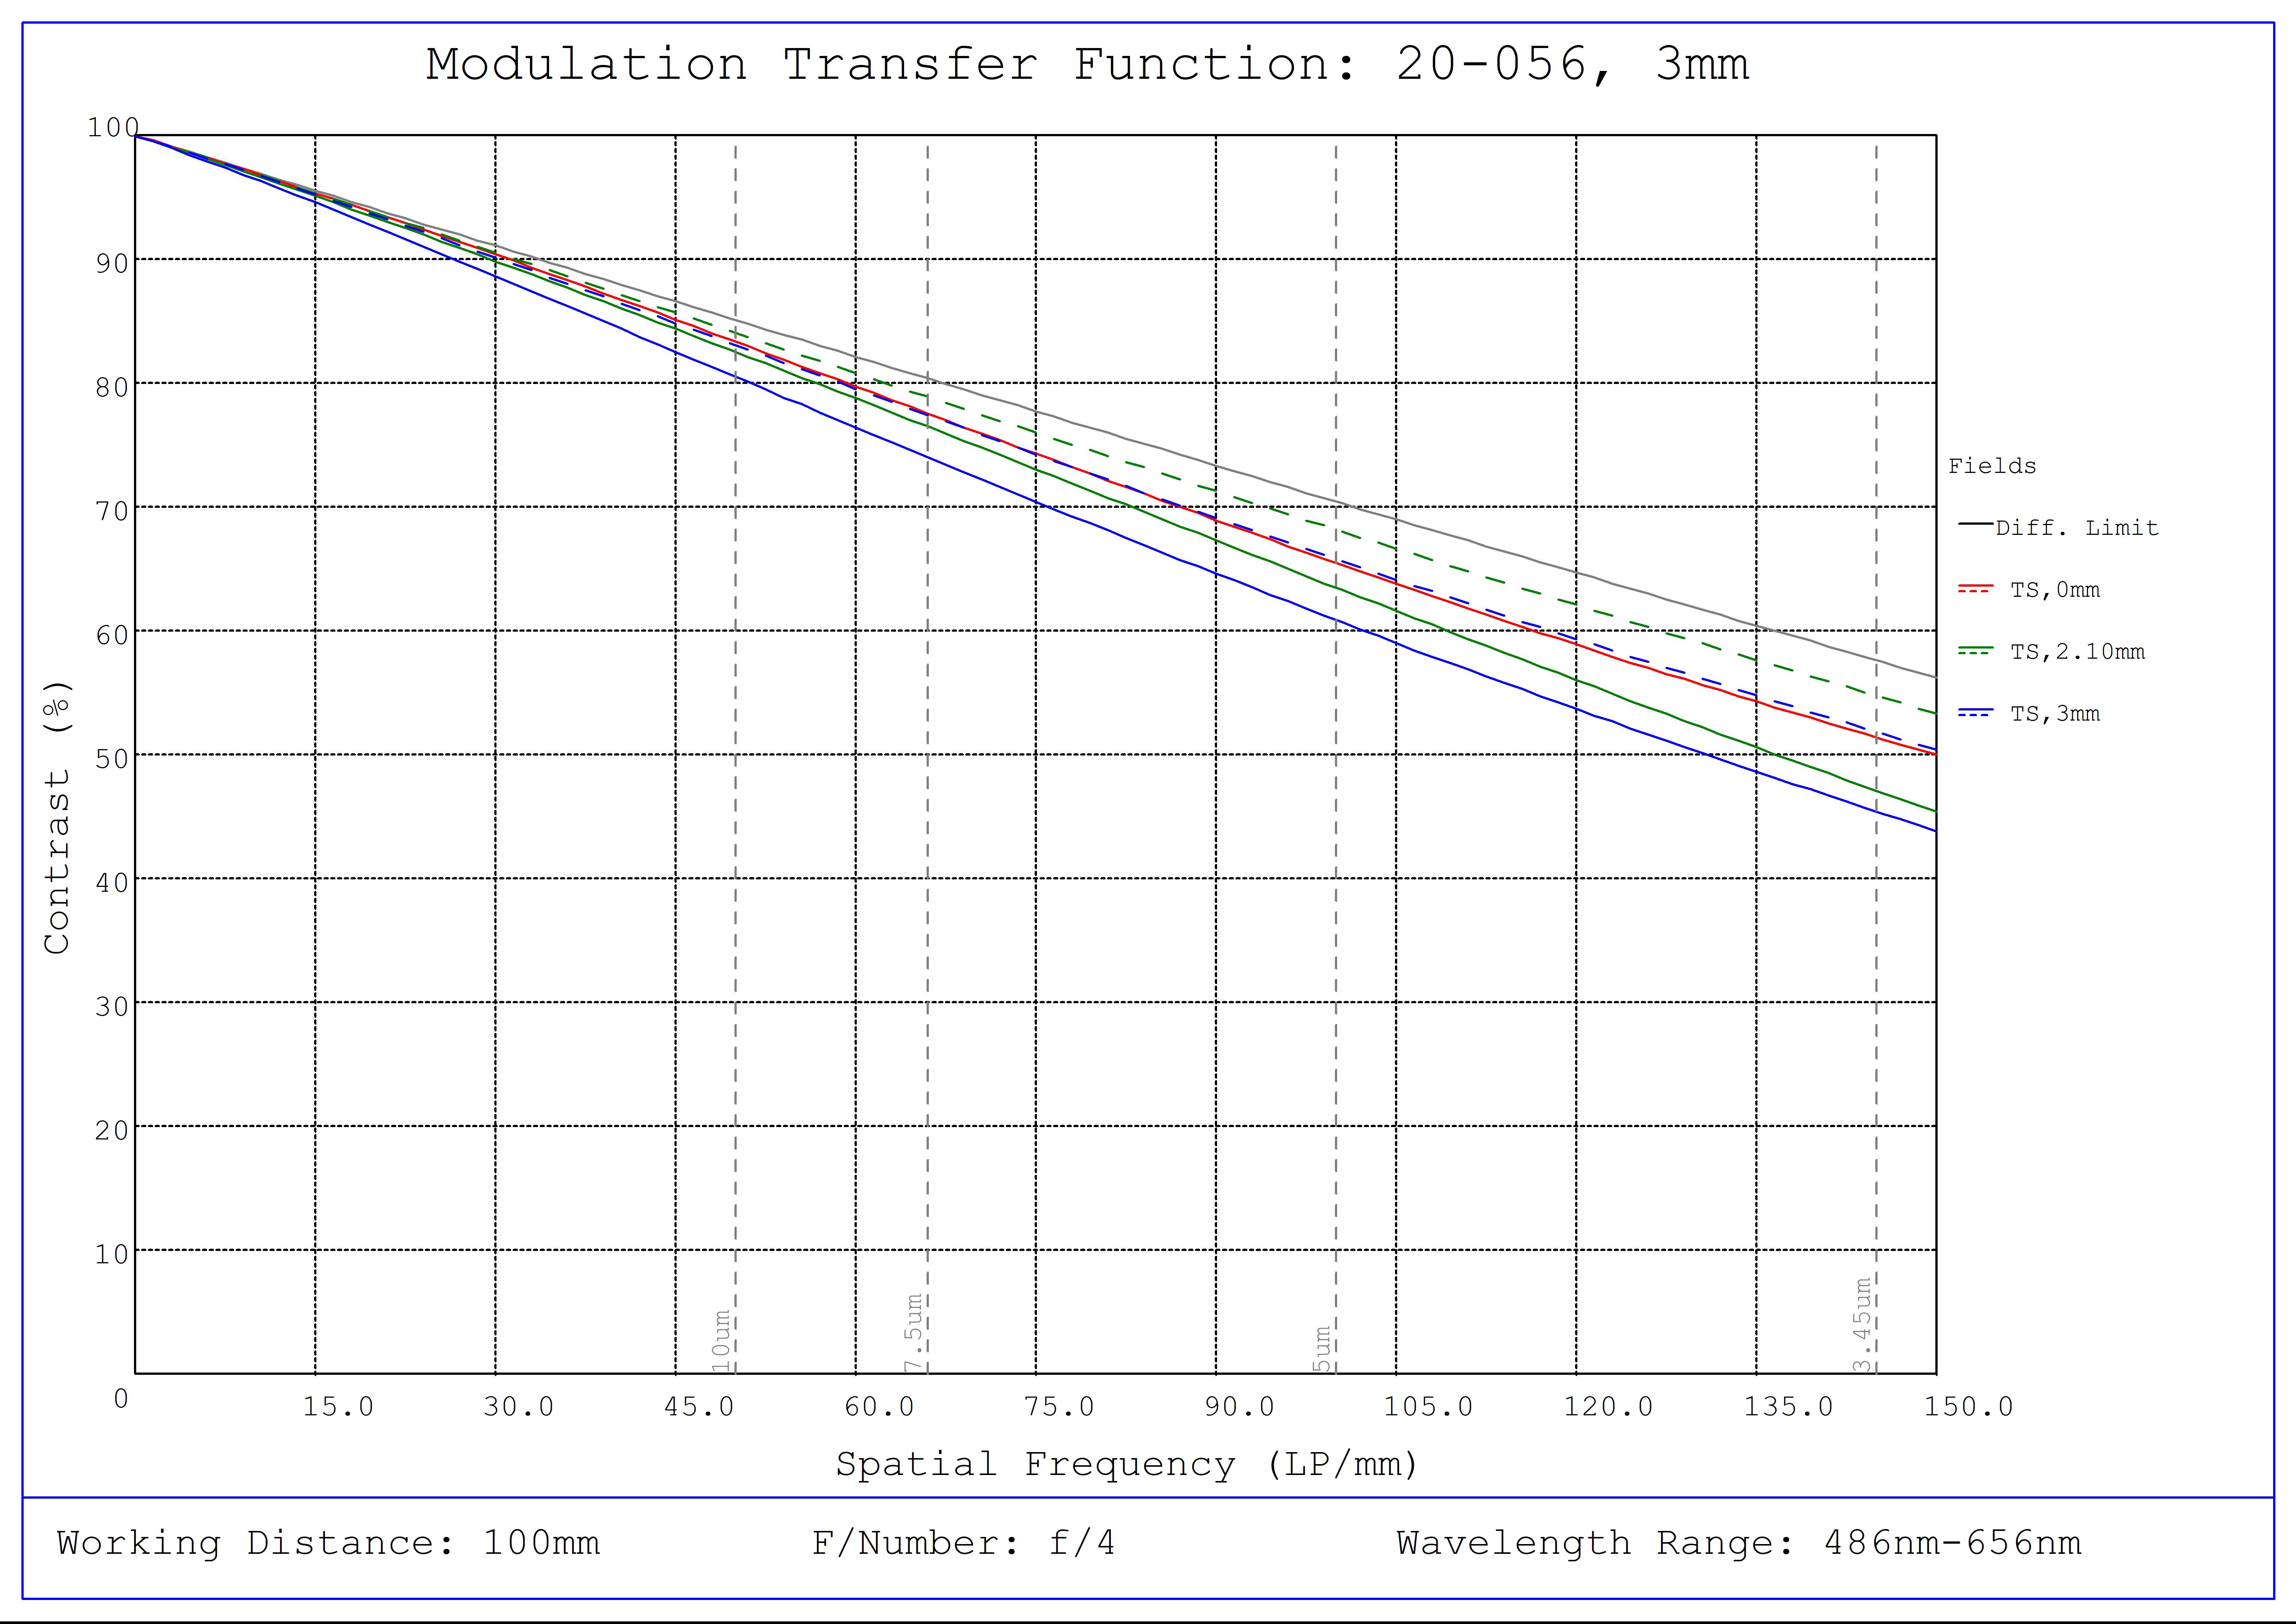 #20-056, 3mm FL f/4.0, IR-Cut Blue Series M12 Lens, Modulated Transfer Function (MTF) Plot, 100mm Working Distance, f4